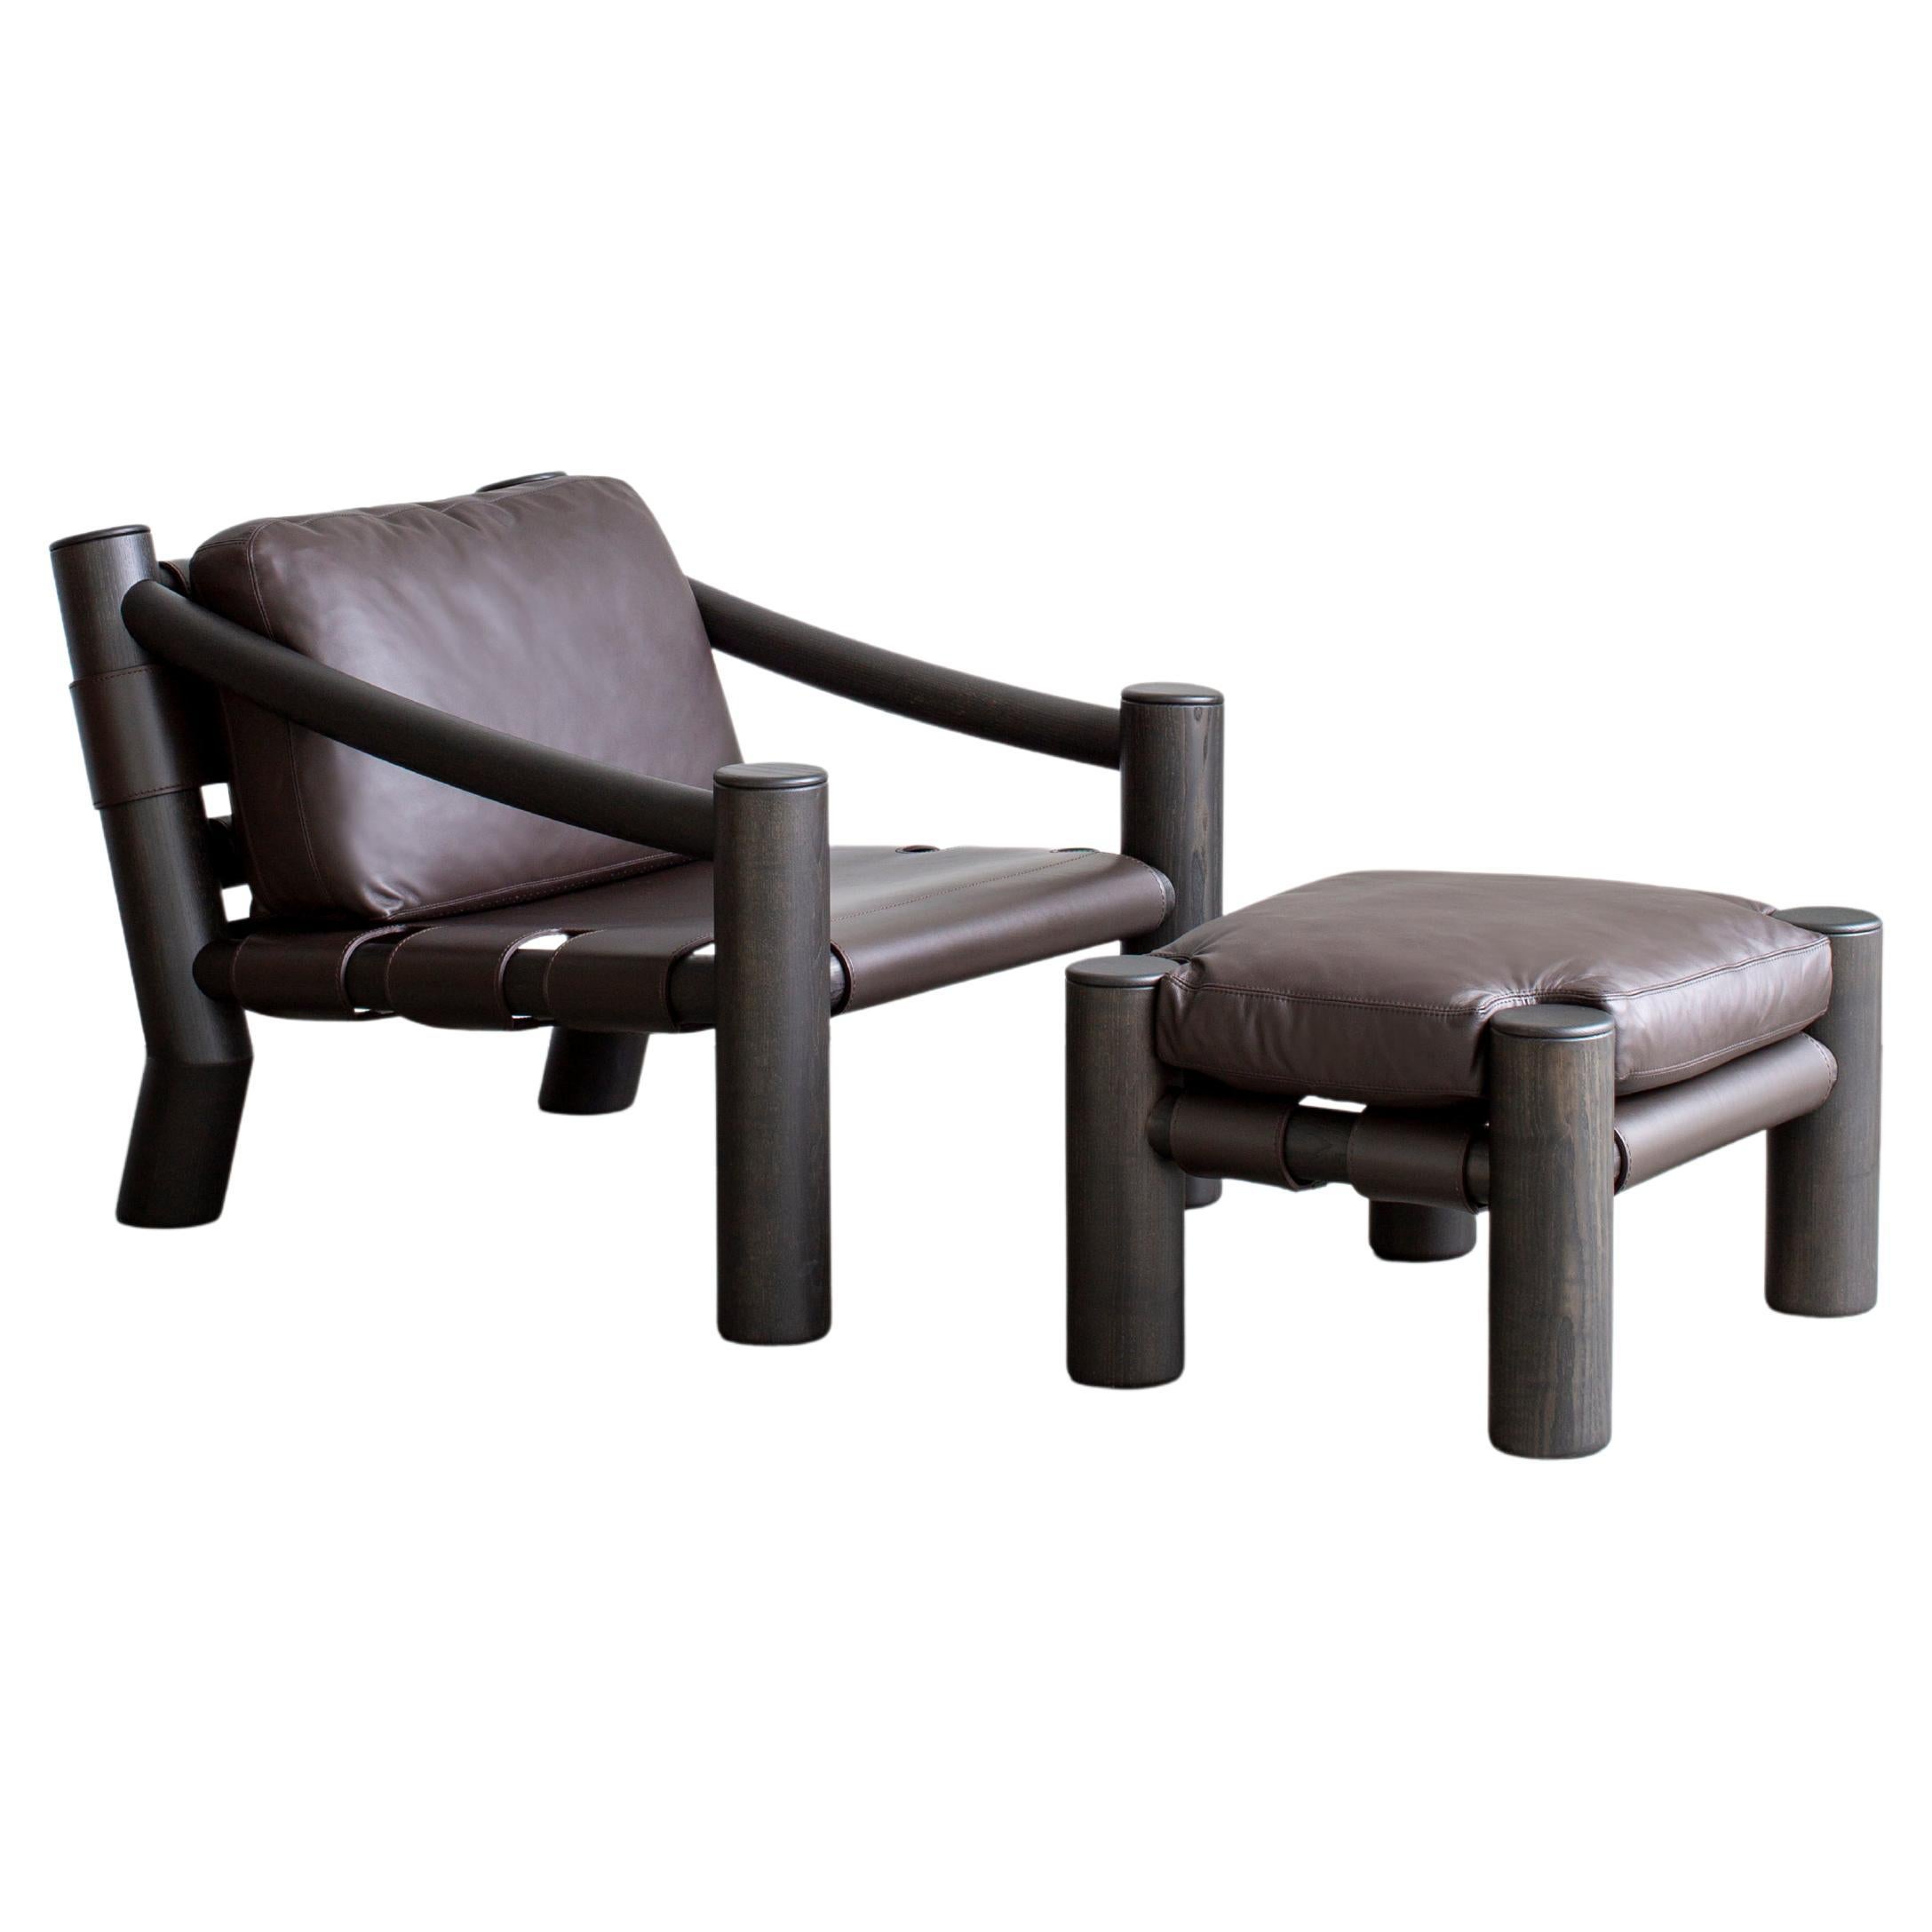 Tacchini Elephant Leather Lounge Chair & Ottoman Designed by Karen Chekerdijan